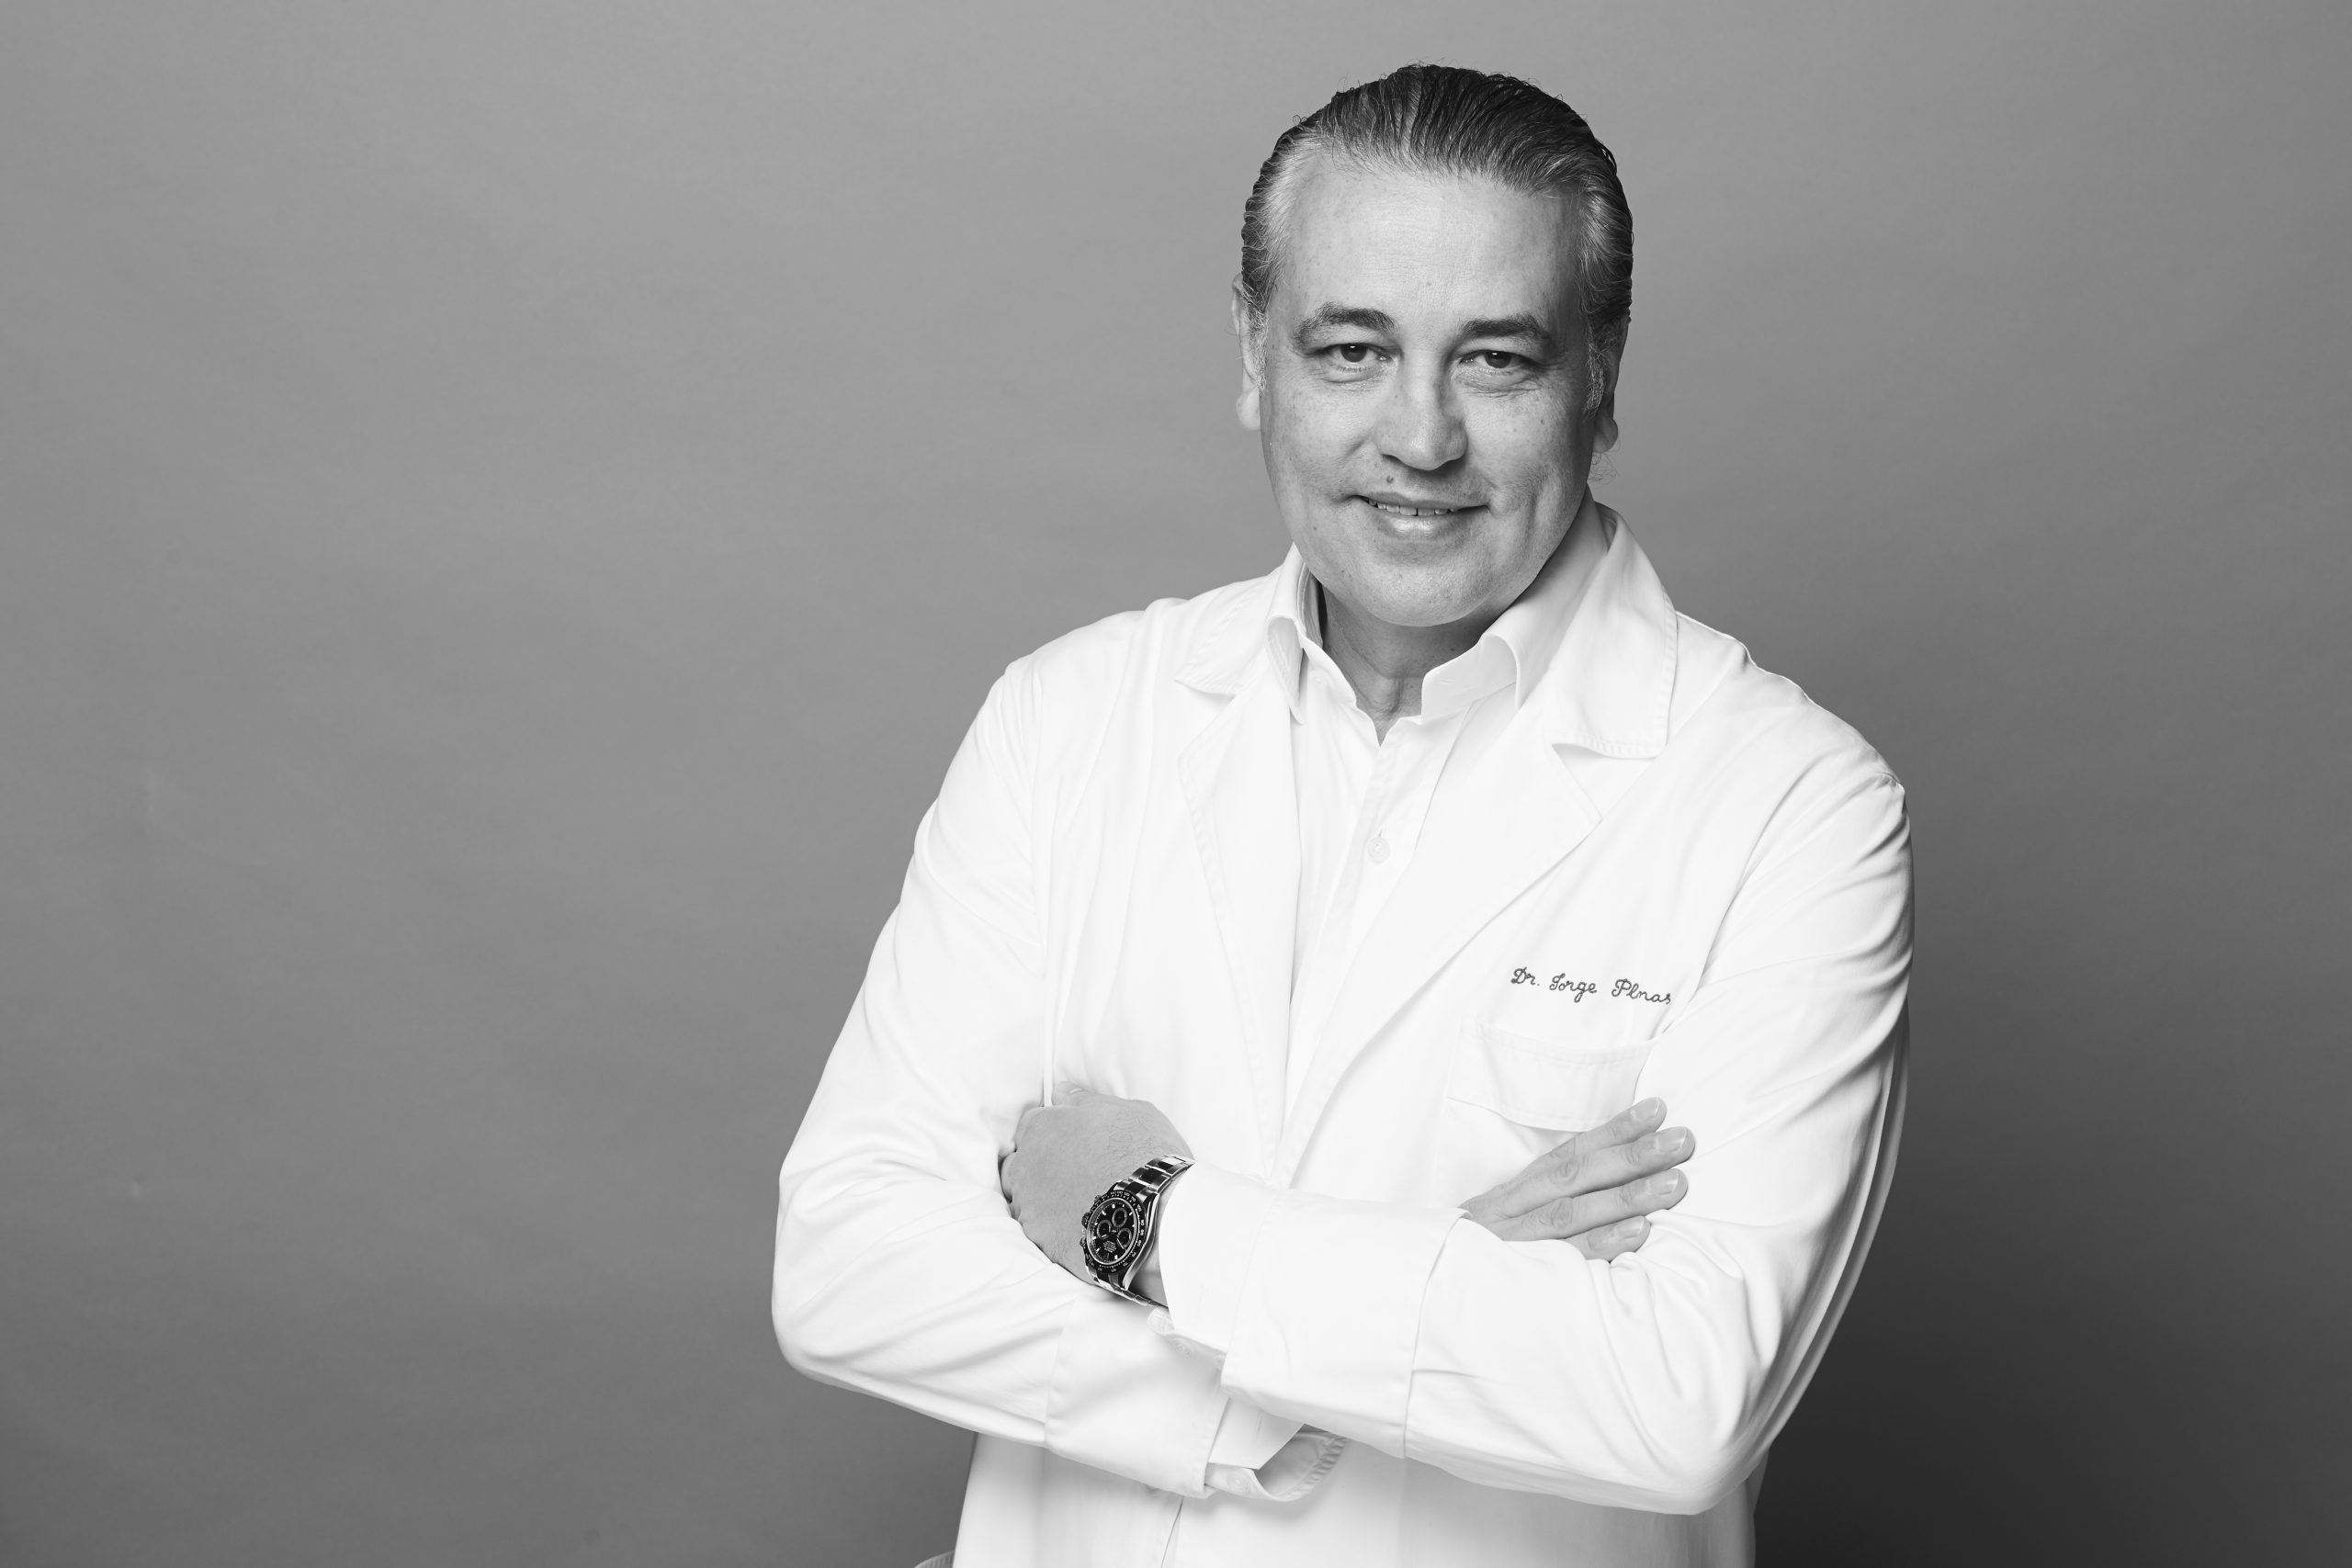 Doctor Jorge Planas